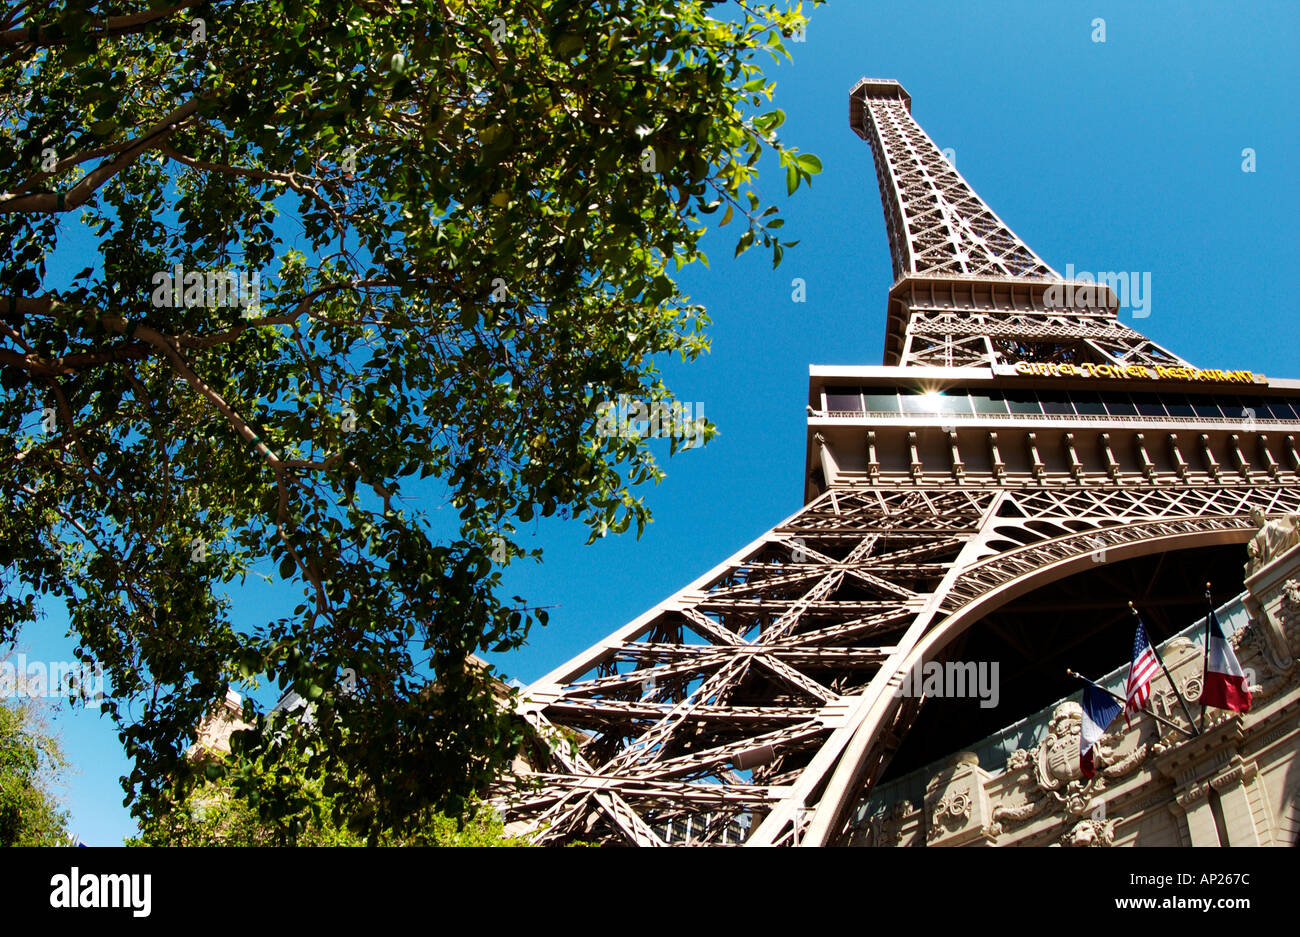 Eiffel tower replica at Paris hotel Las Vegas Stock Photo